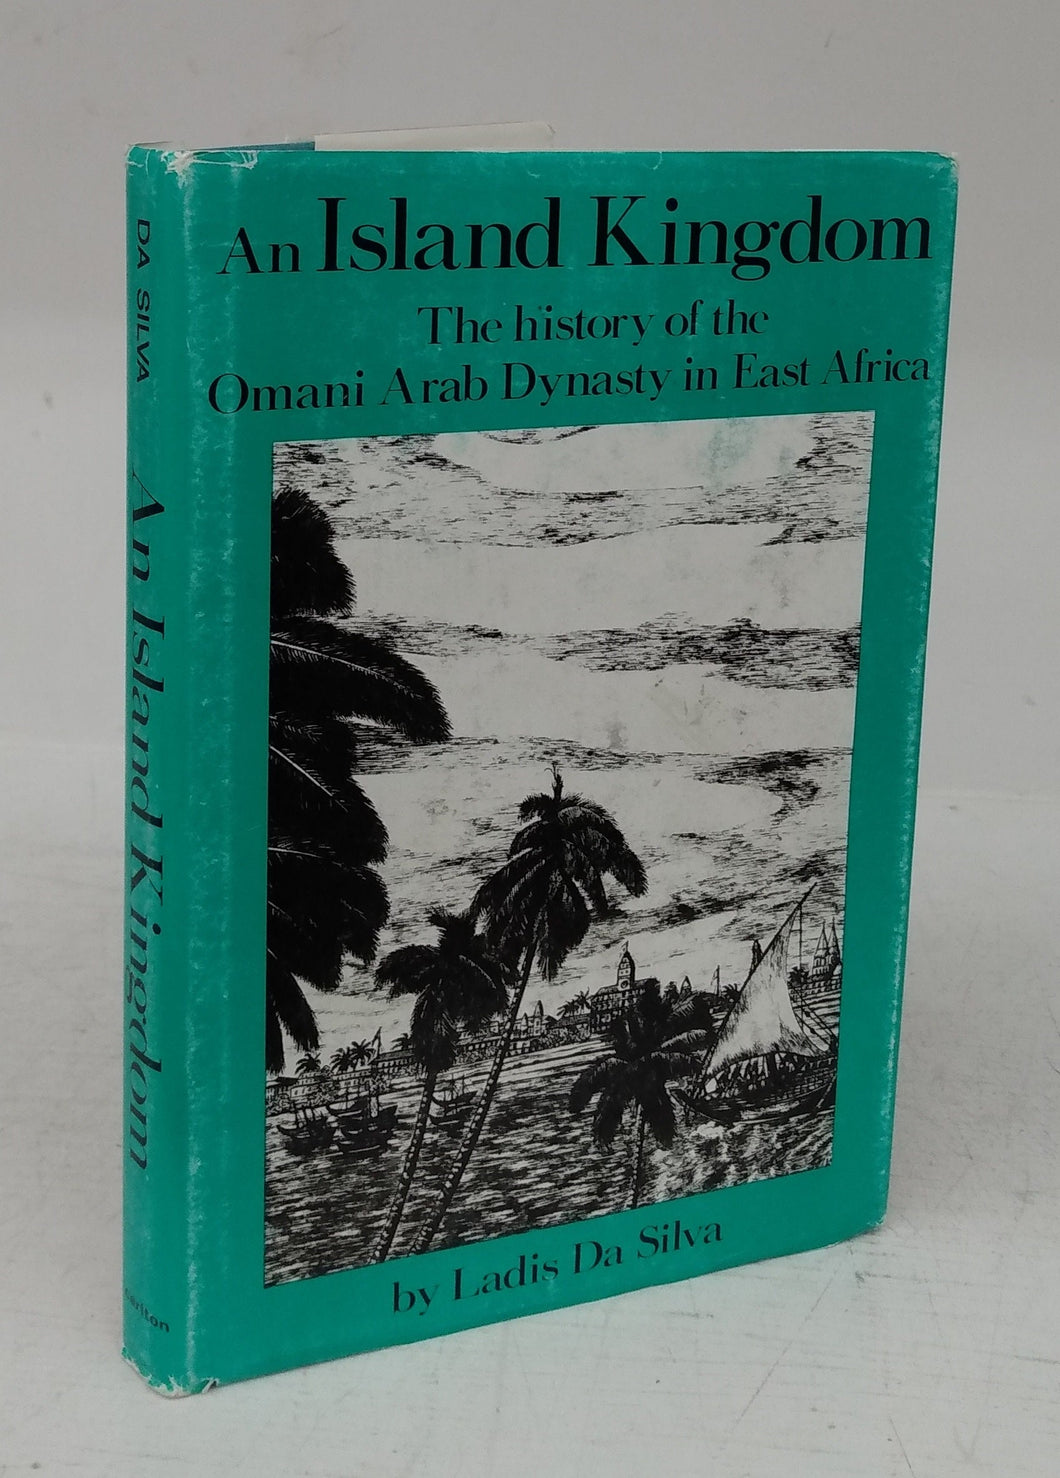 An Island Kingdom: The history of the Omani Arab Dynasty in East Africa